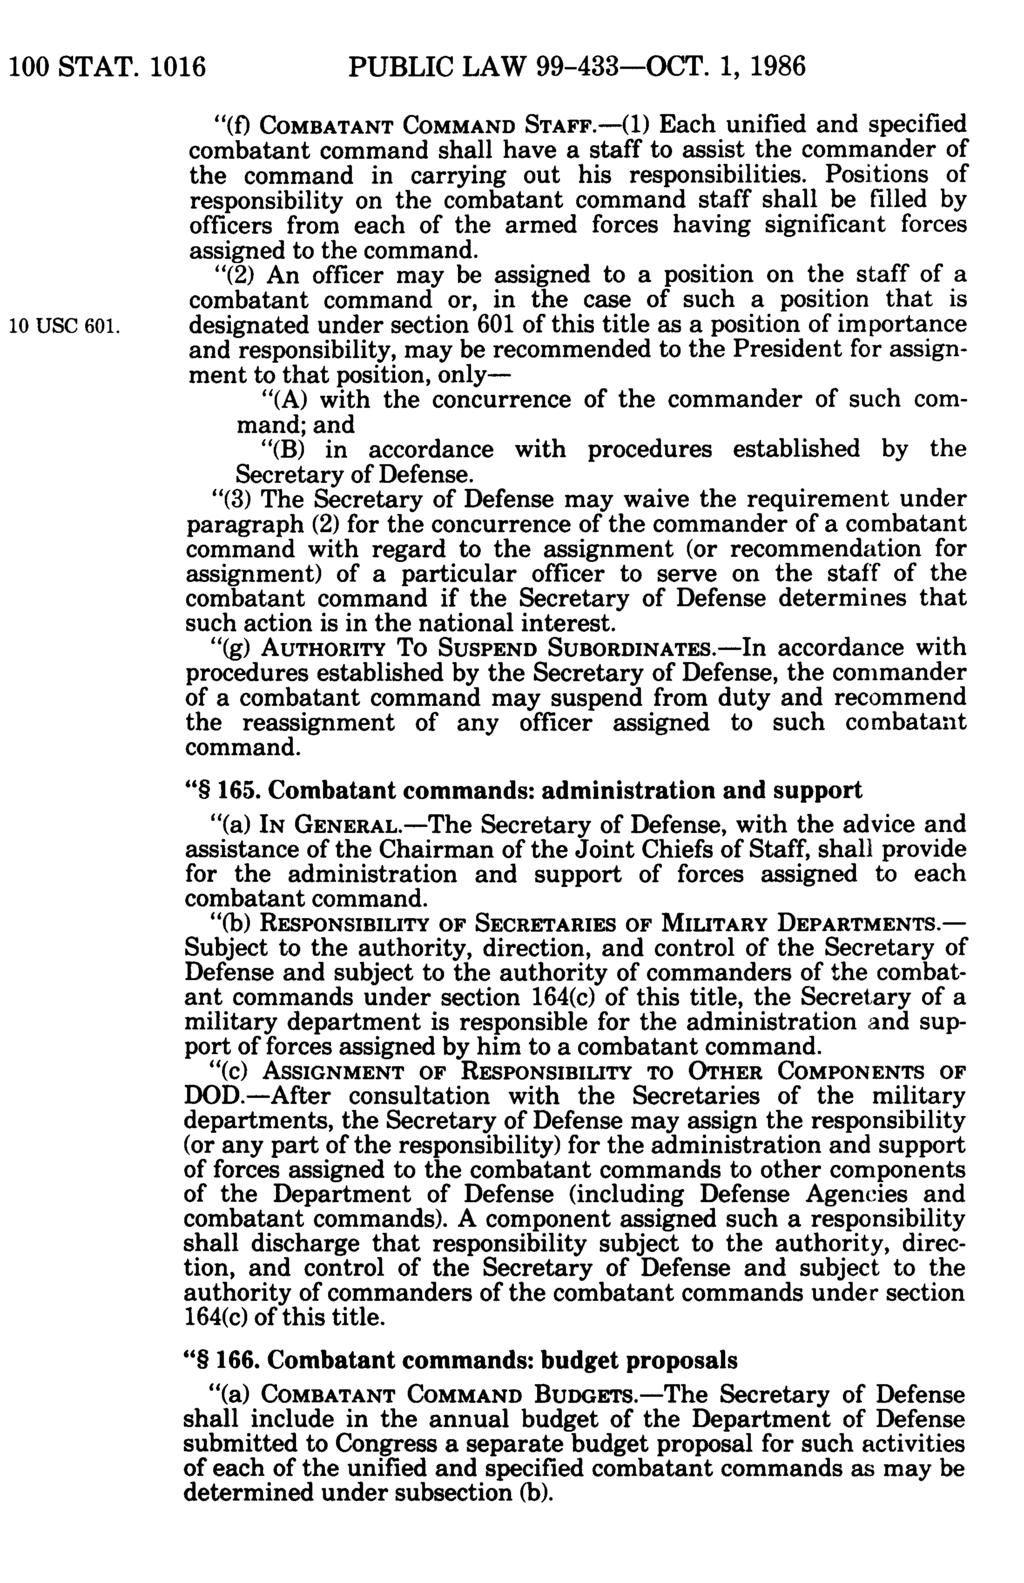 100 STAT. 1016 PUBLIC LAW 99-433-OCT. 1, 1986 10 USC 601. (f) COMBATANT COMMAND STAFF.